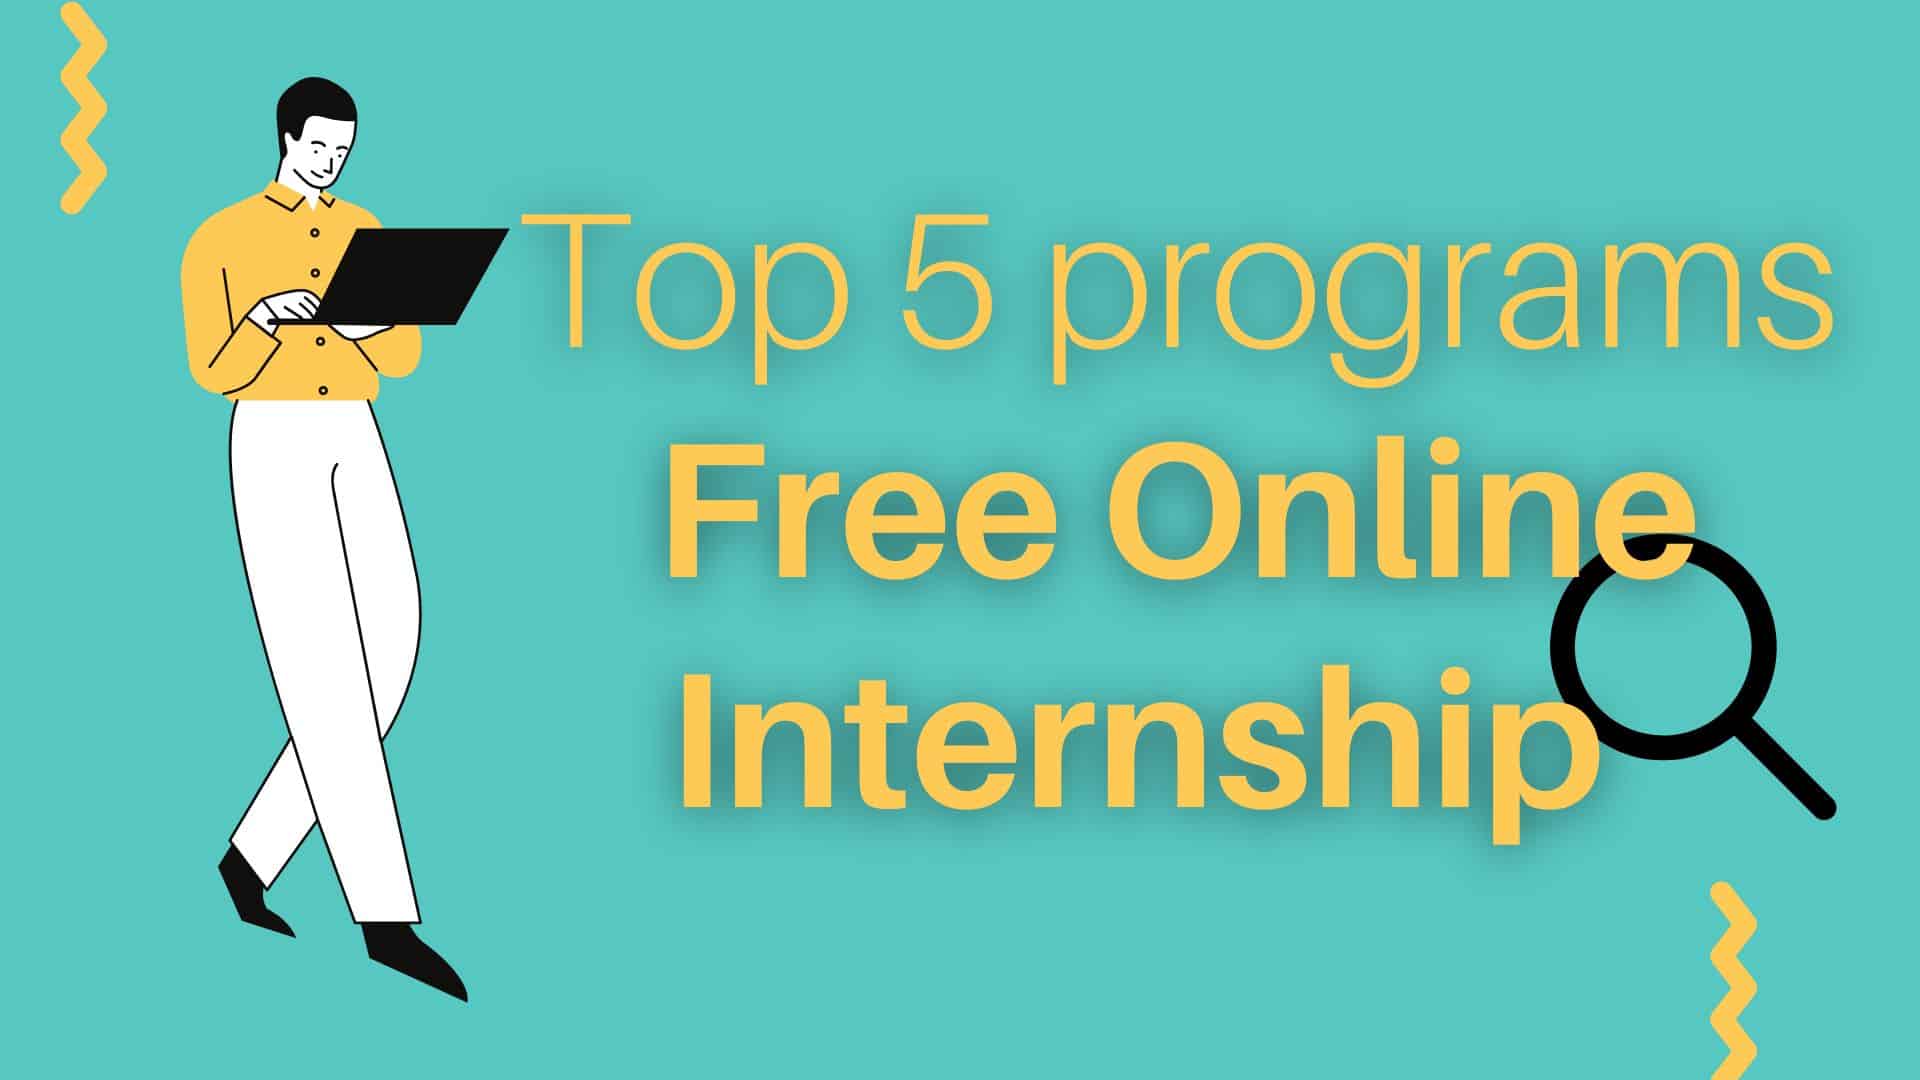 Free Online Internship - Top 5 programs